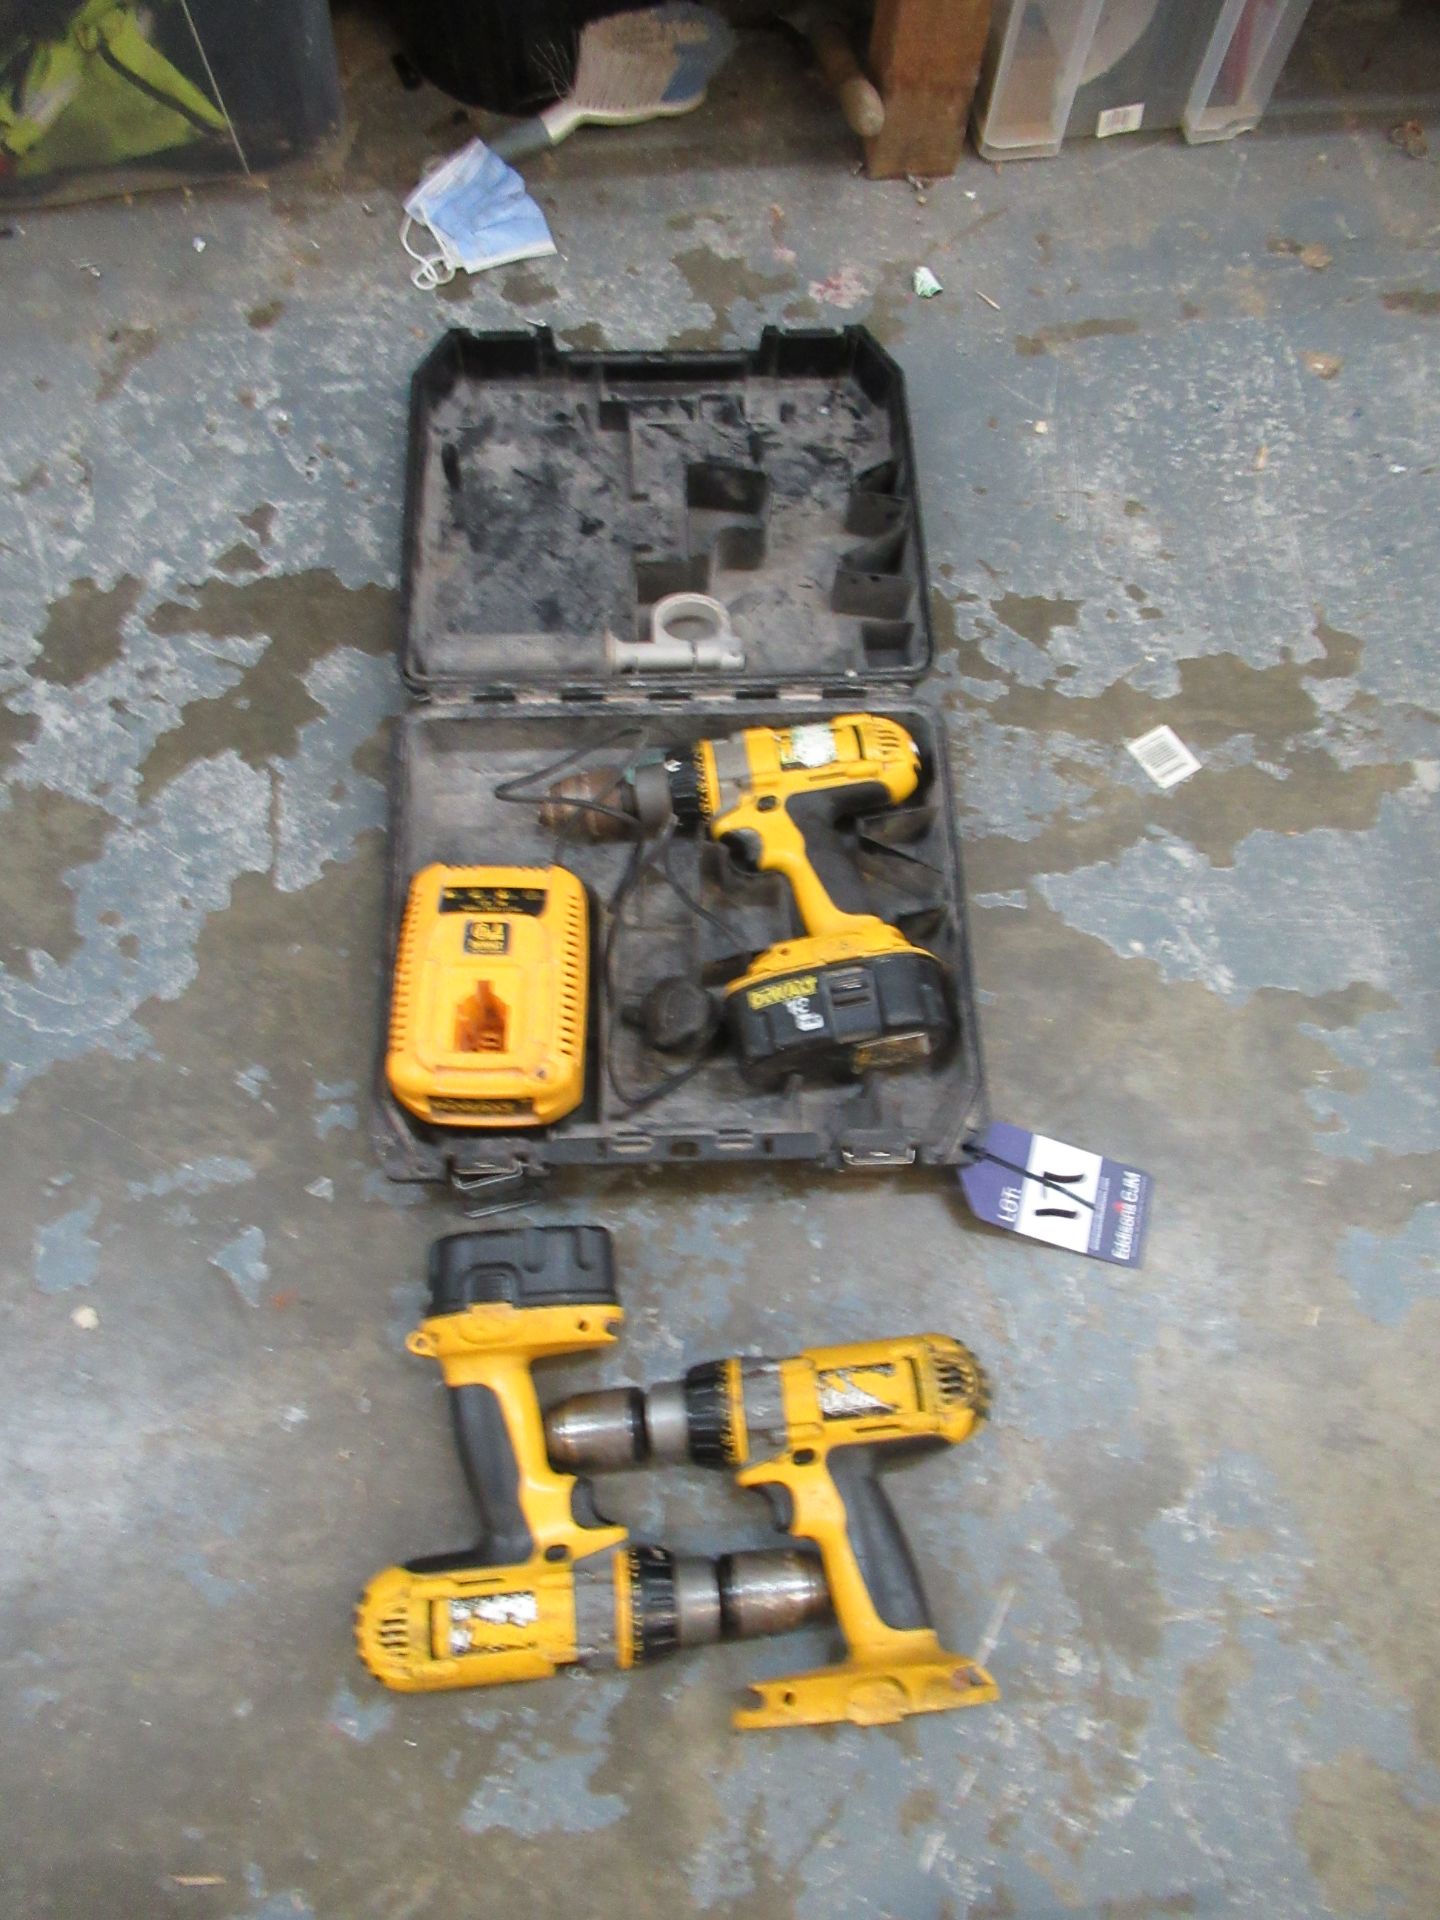 2x Makita HR2400 Hammer Drills in case - 110volts